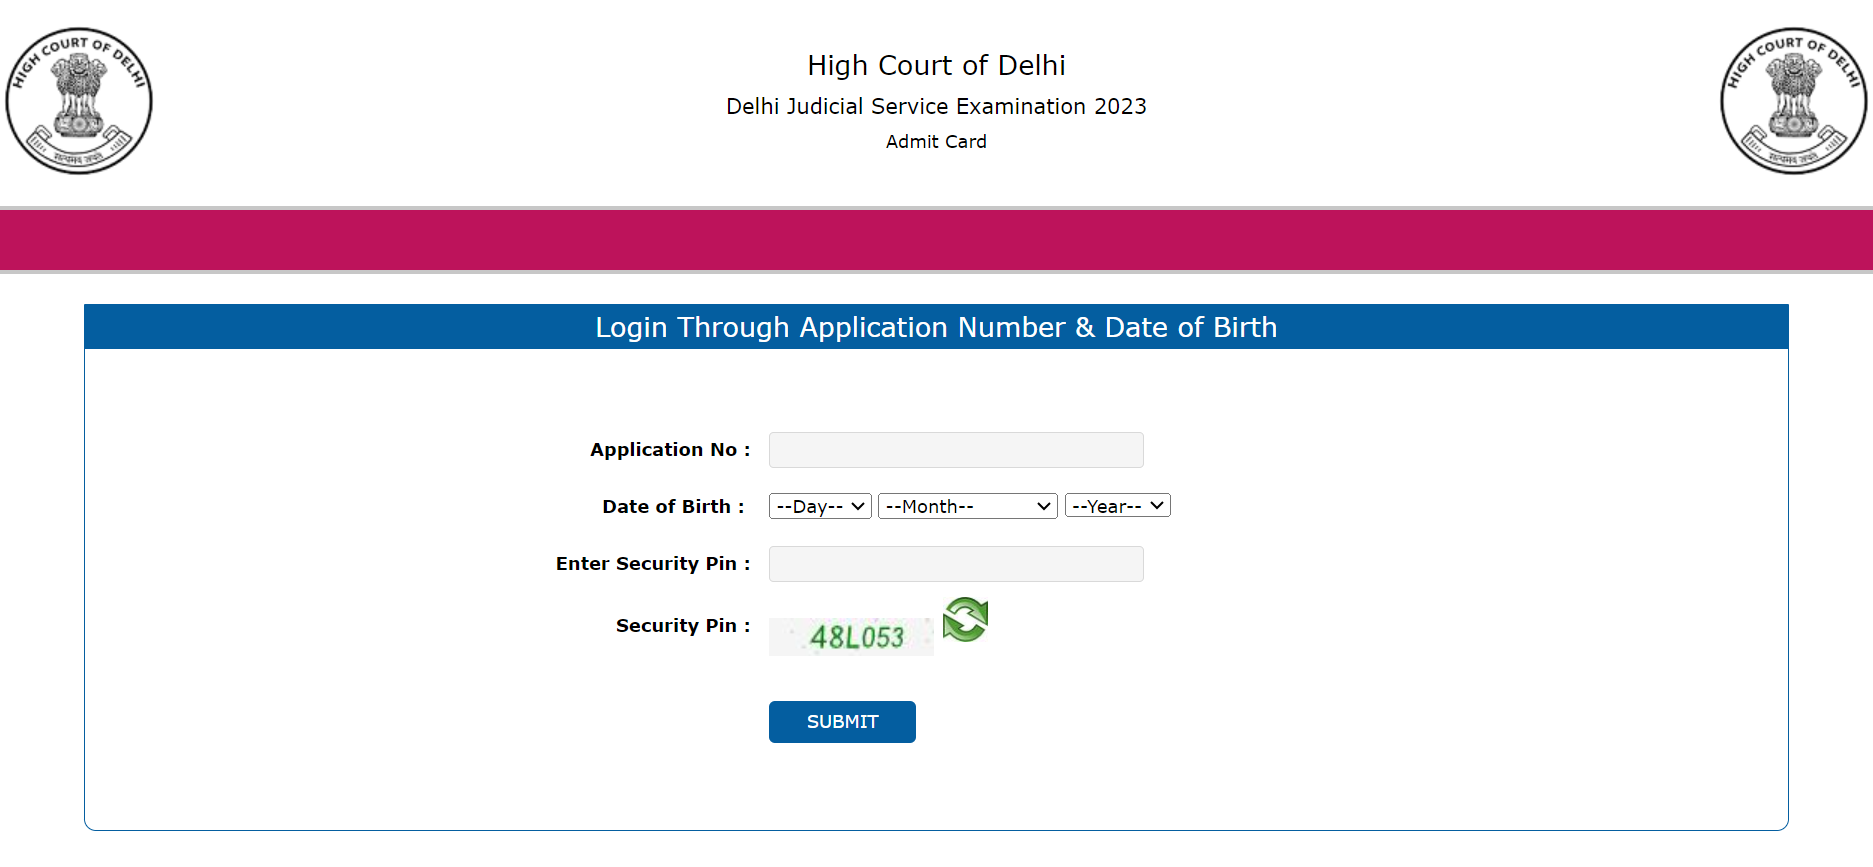 Delhi Judiciary Admit Card 2023